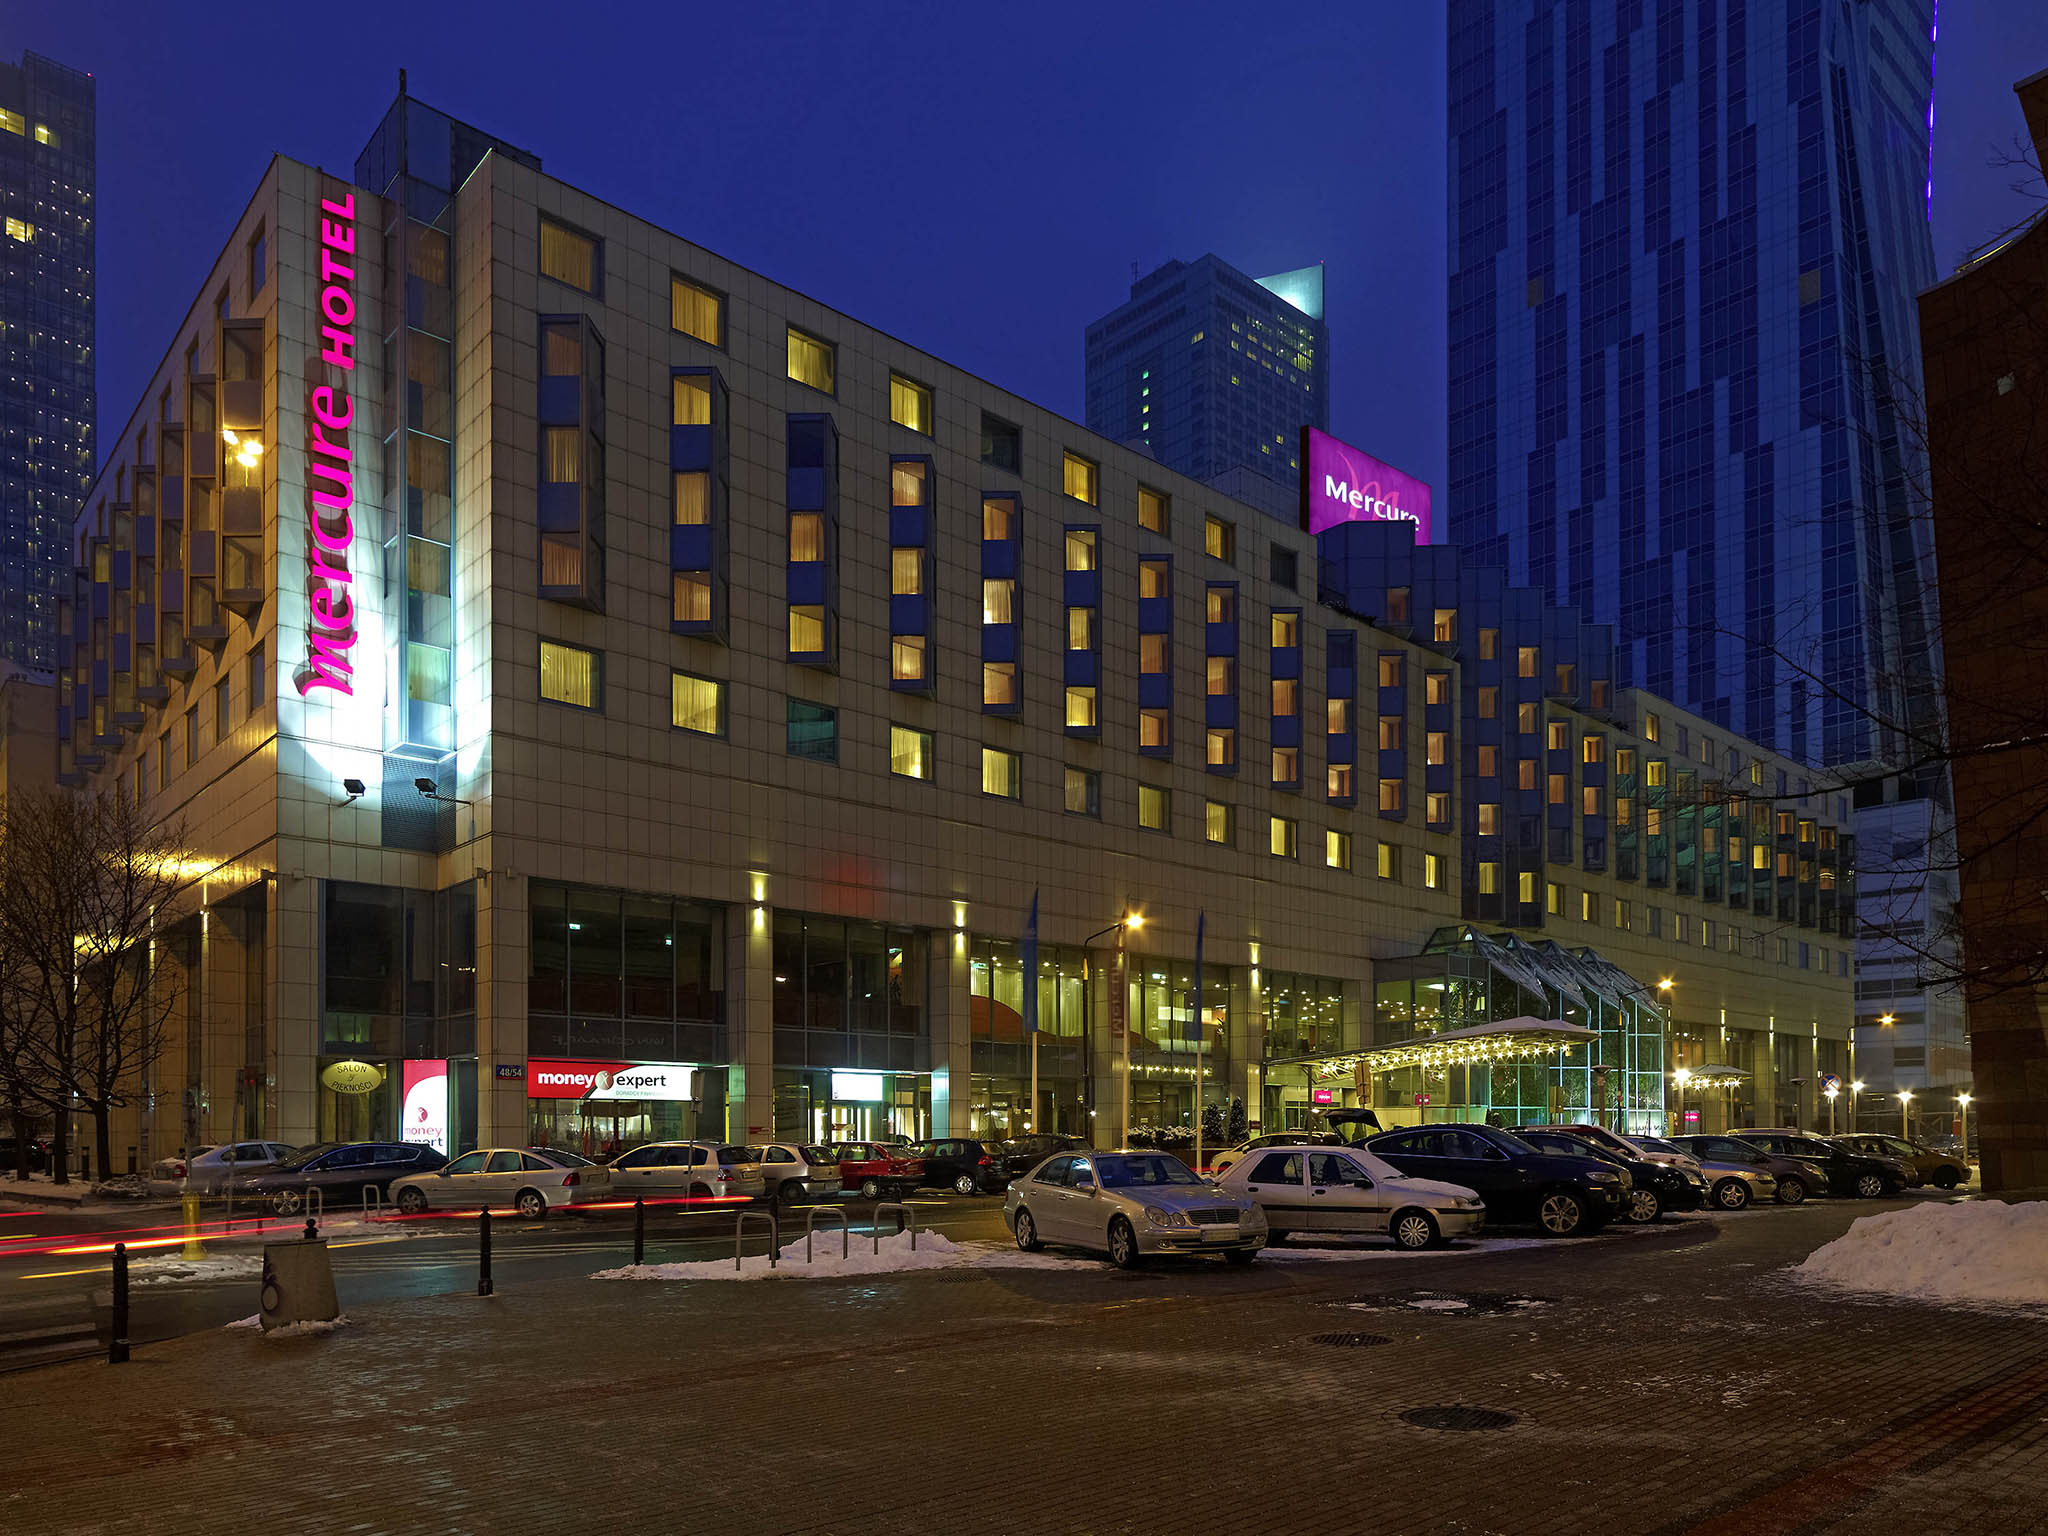 Hotels Used; Mercure Centrum or Radisson Blu